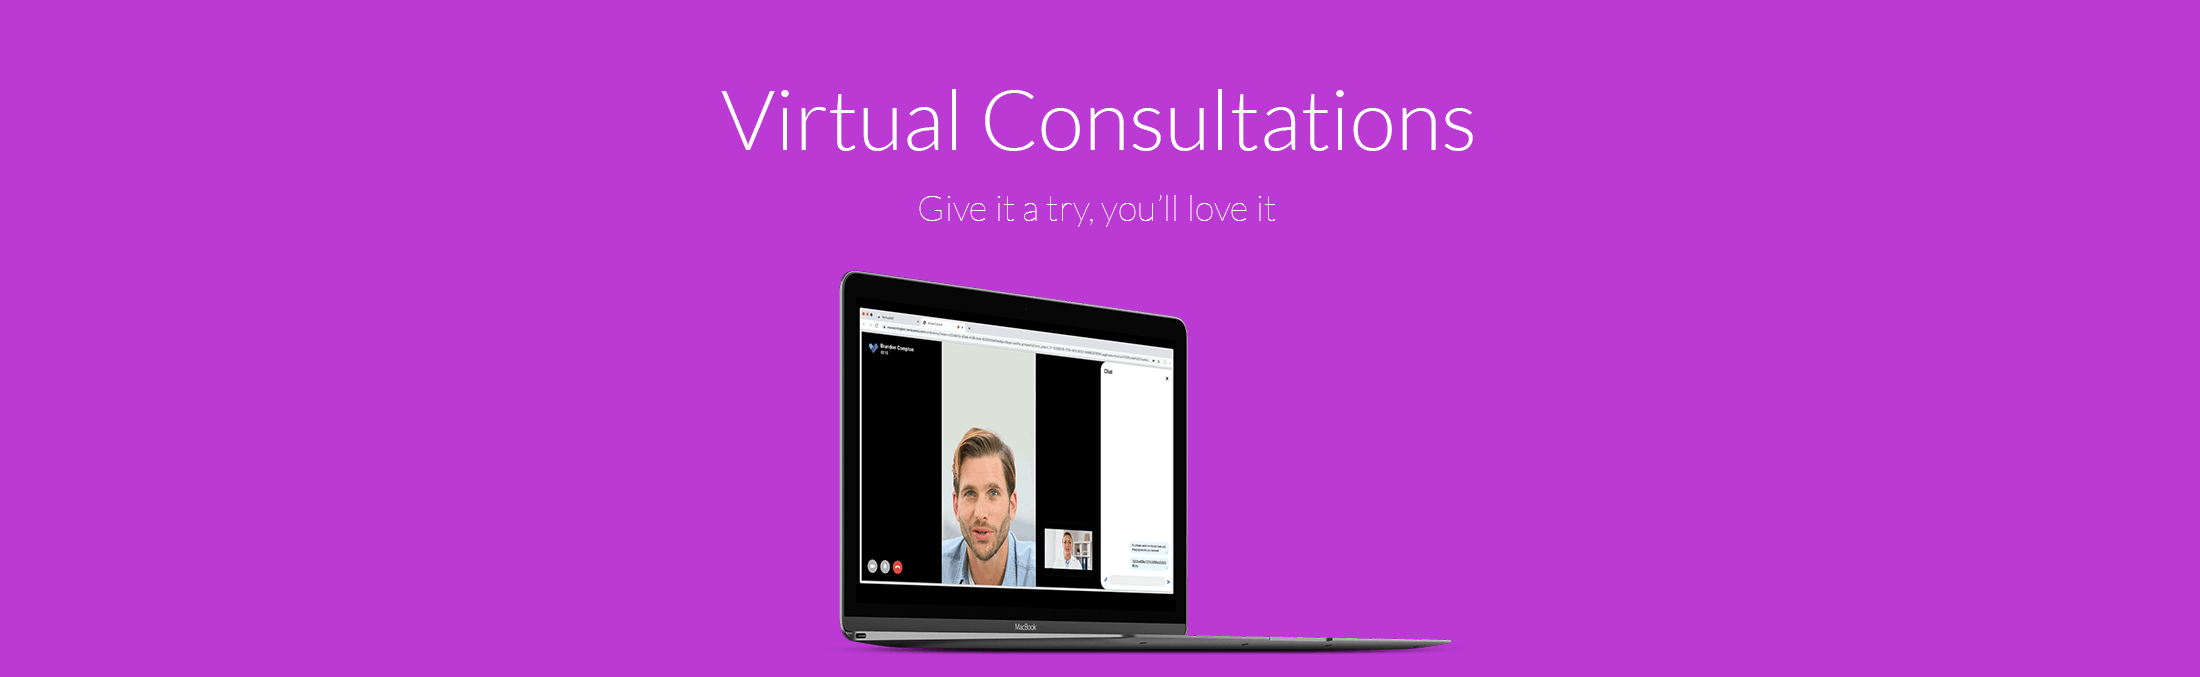 telemedicine software virtual consultations